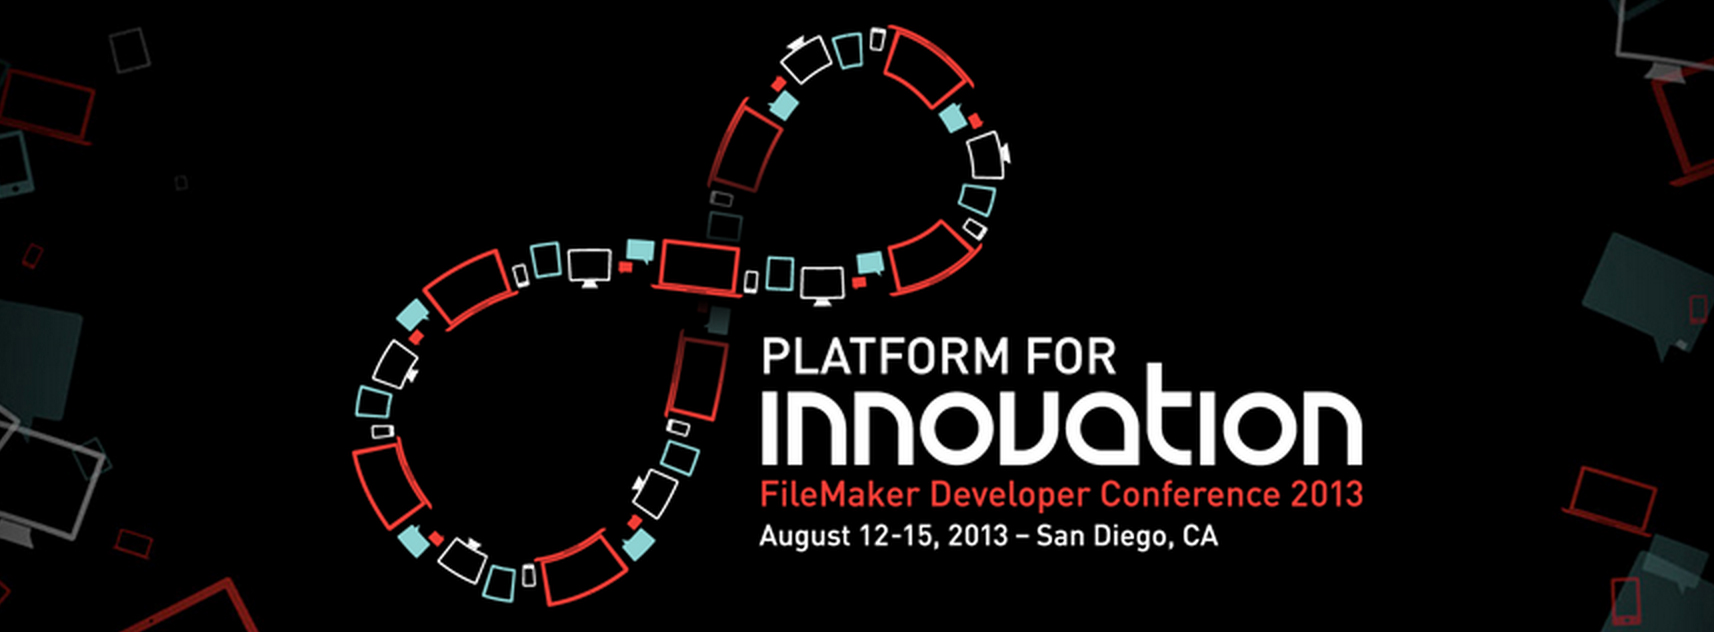 FileMaker DevCon 2013